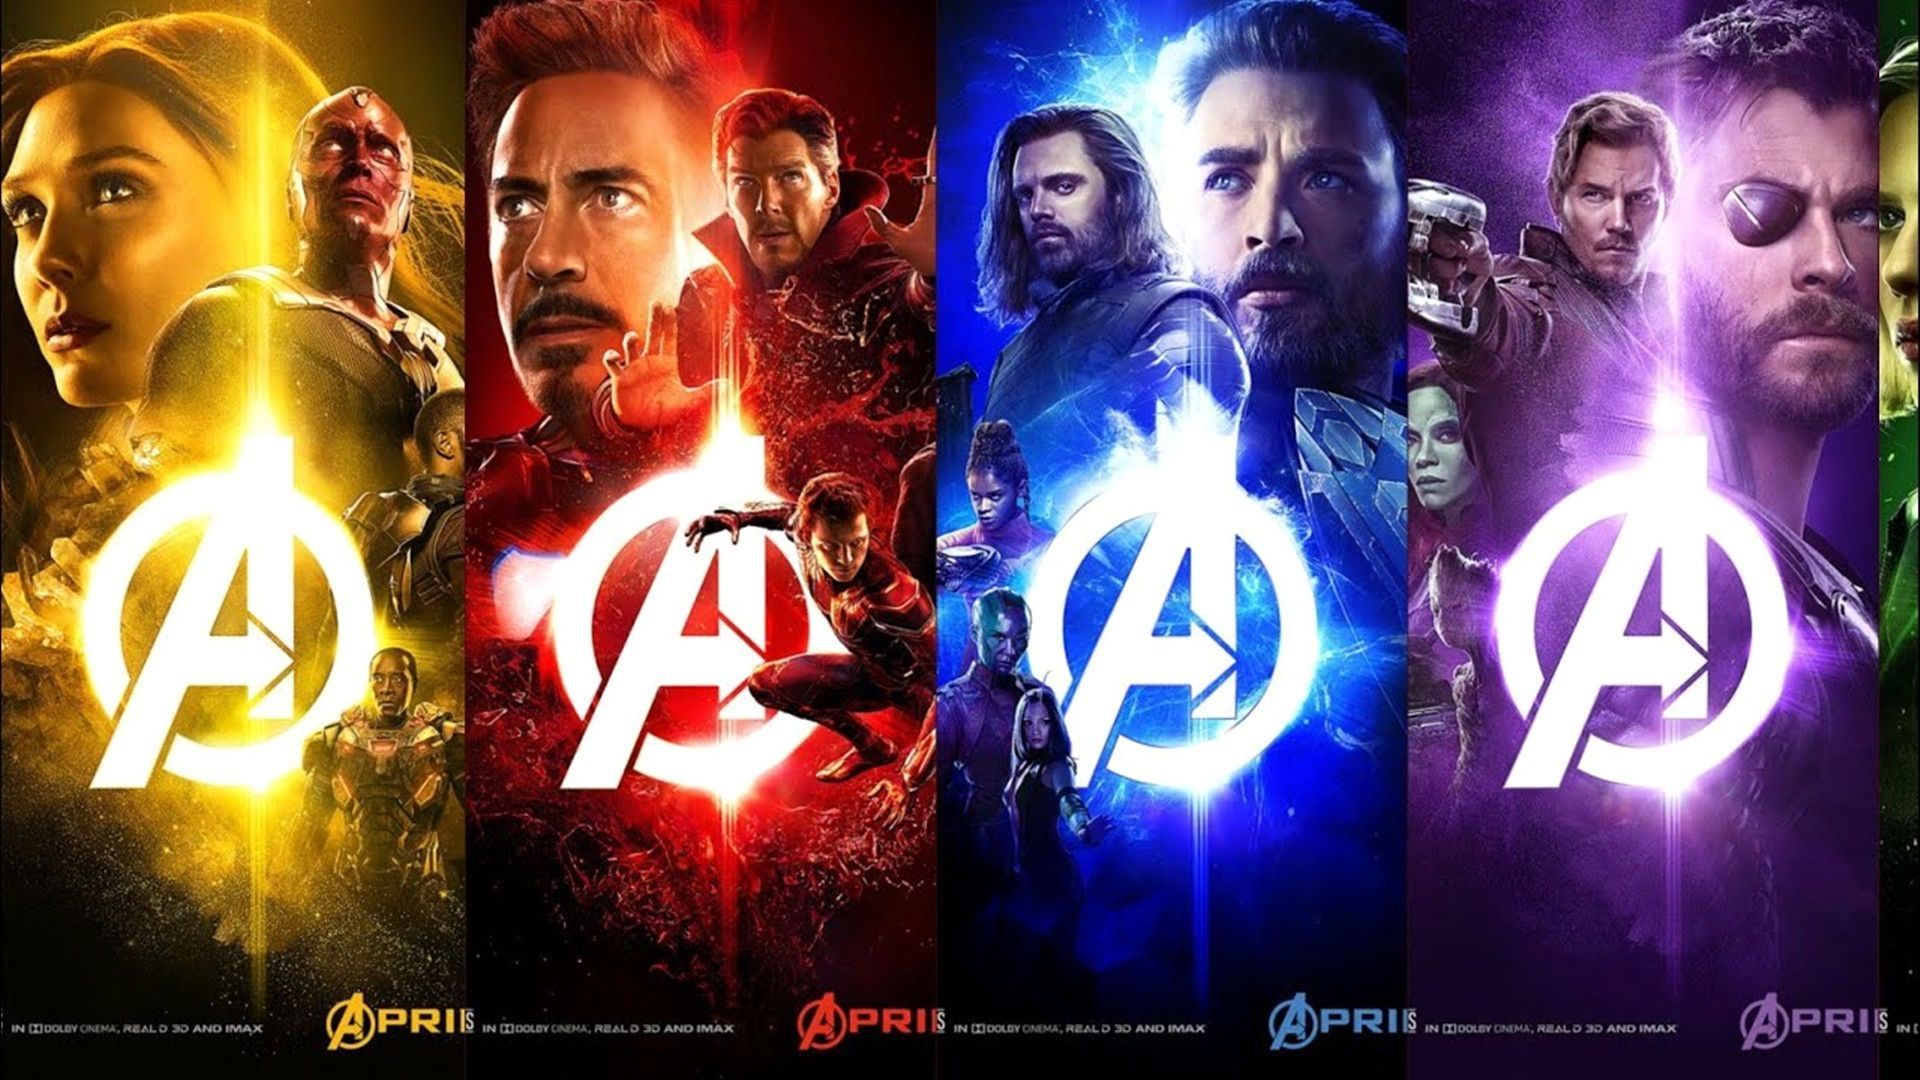 Inspirational Avengers Endgame Movie Four Characters Wallpaper. Character wallpaper, Avengers, Avengers infinity war